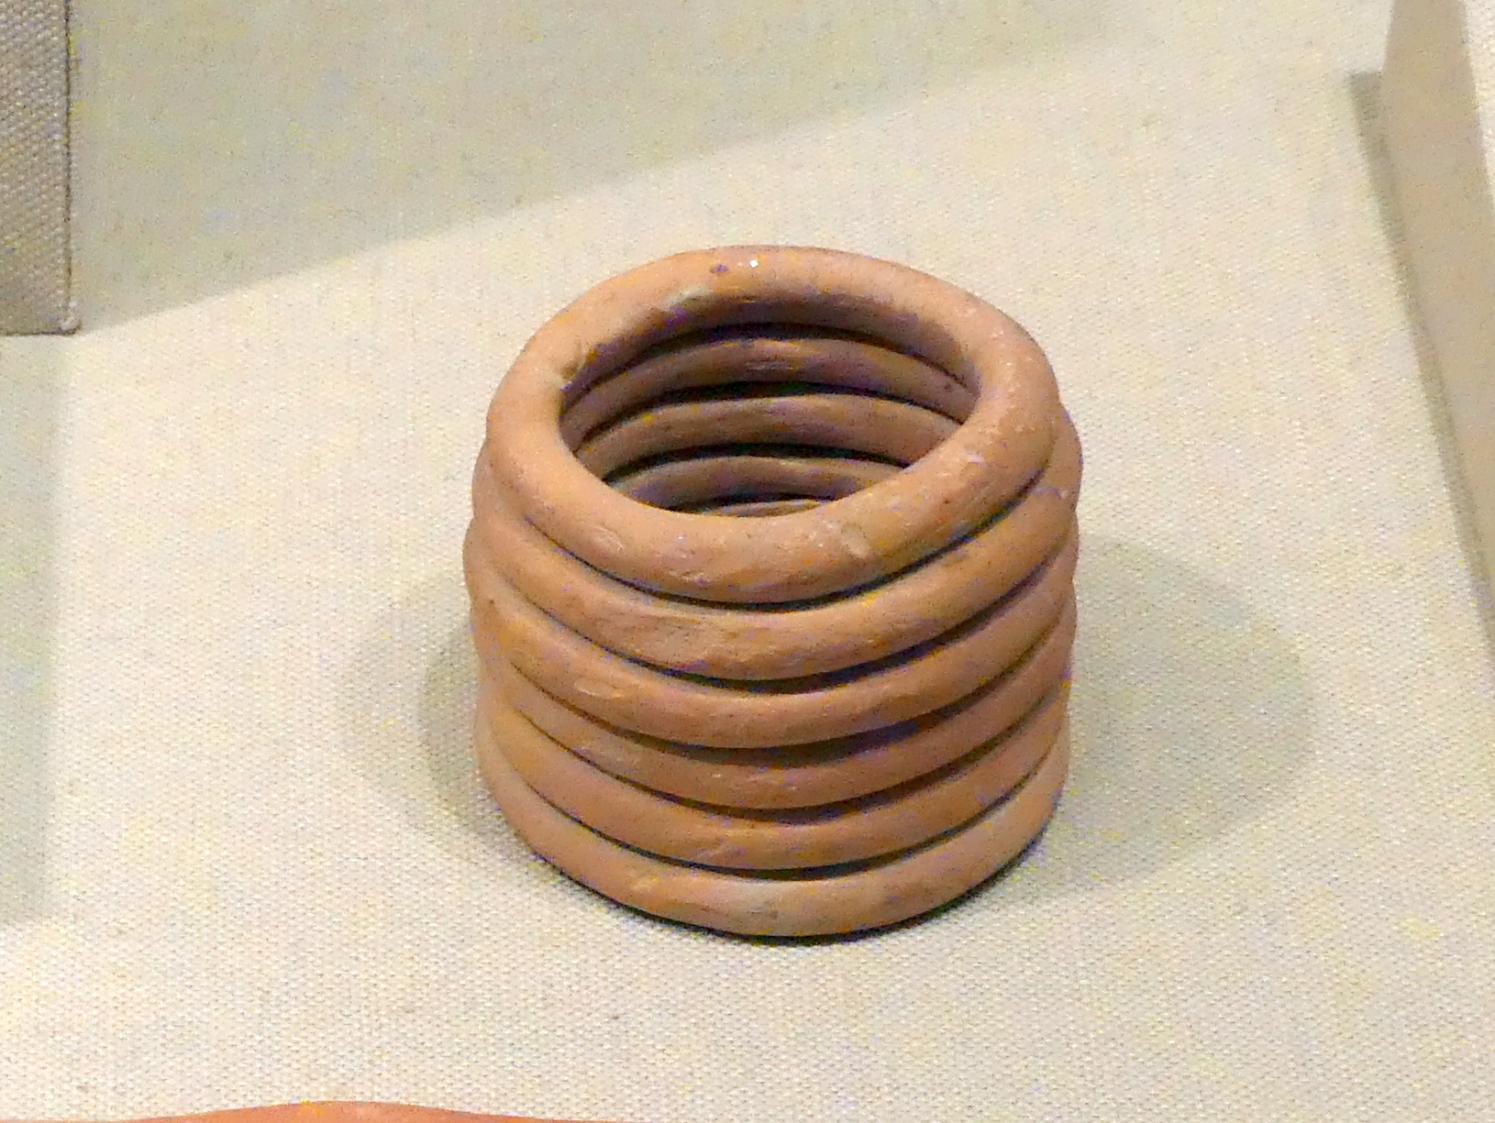 Spulenarmring, Harappan 3, 2600 - 1900 v. Chr., 2600 - 1900 v. Chr., Bild 1/2